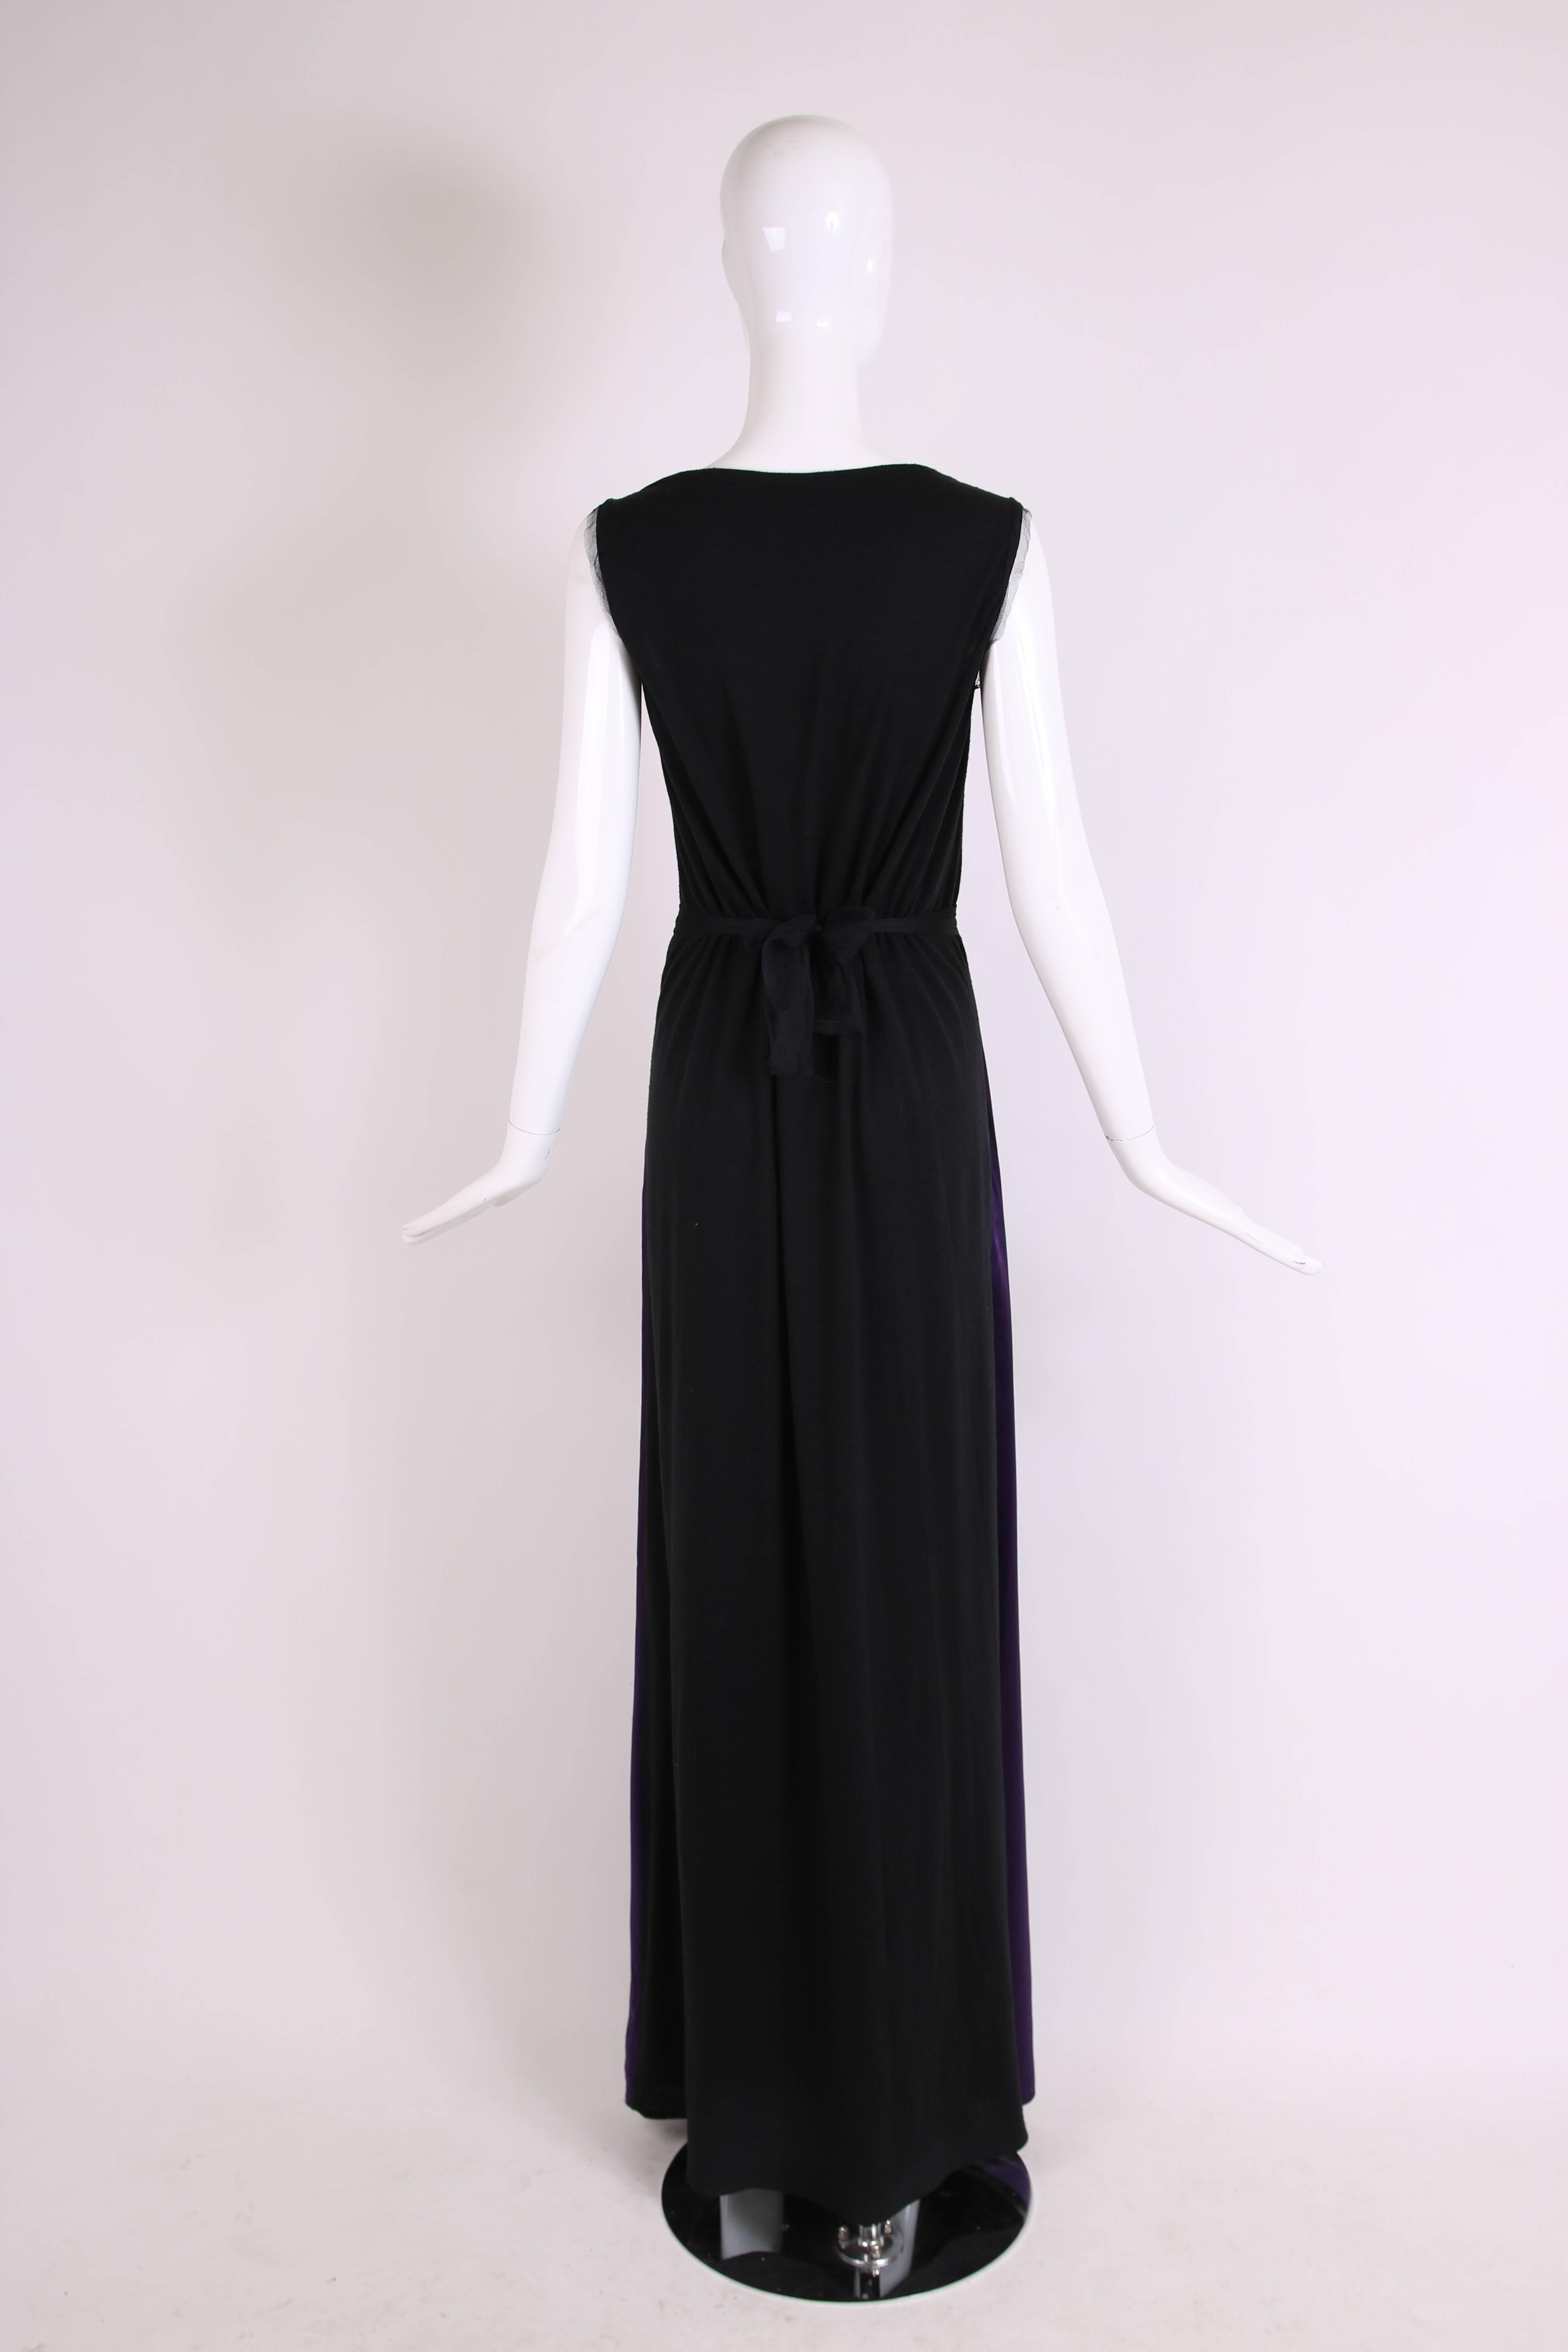 Women's 2006 Lanvin Purple & Black Evening Gown Dress w/ Illusion Top